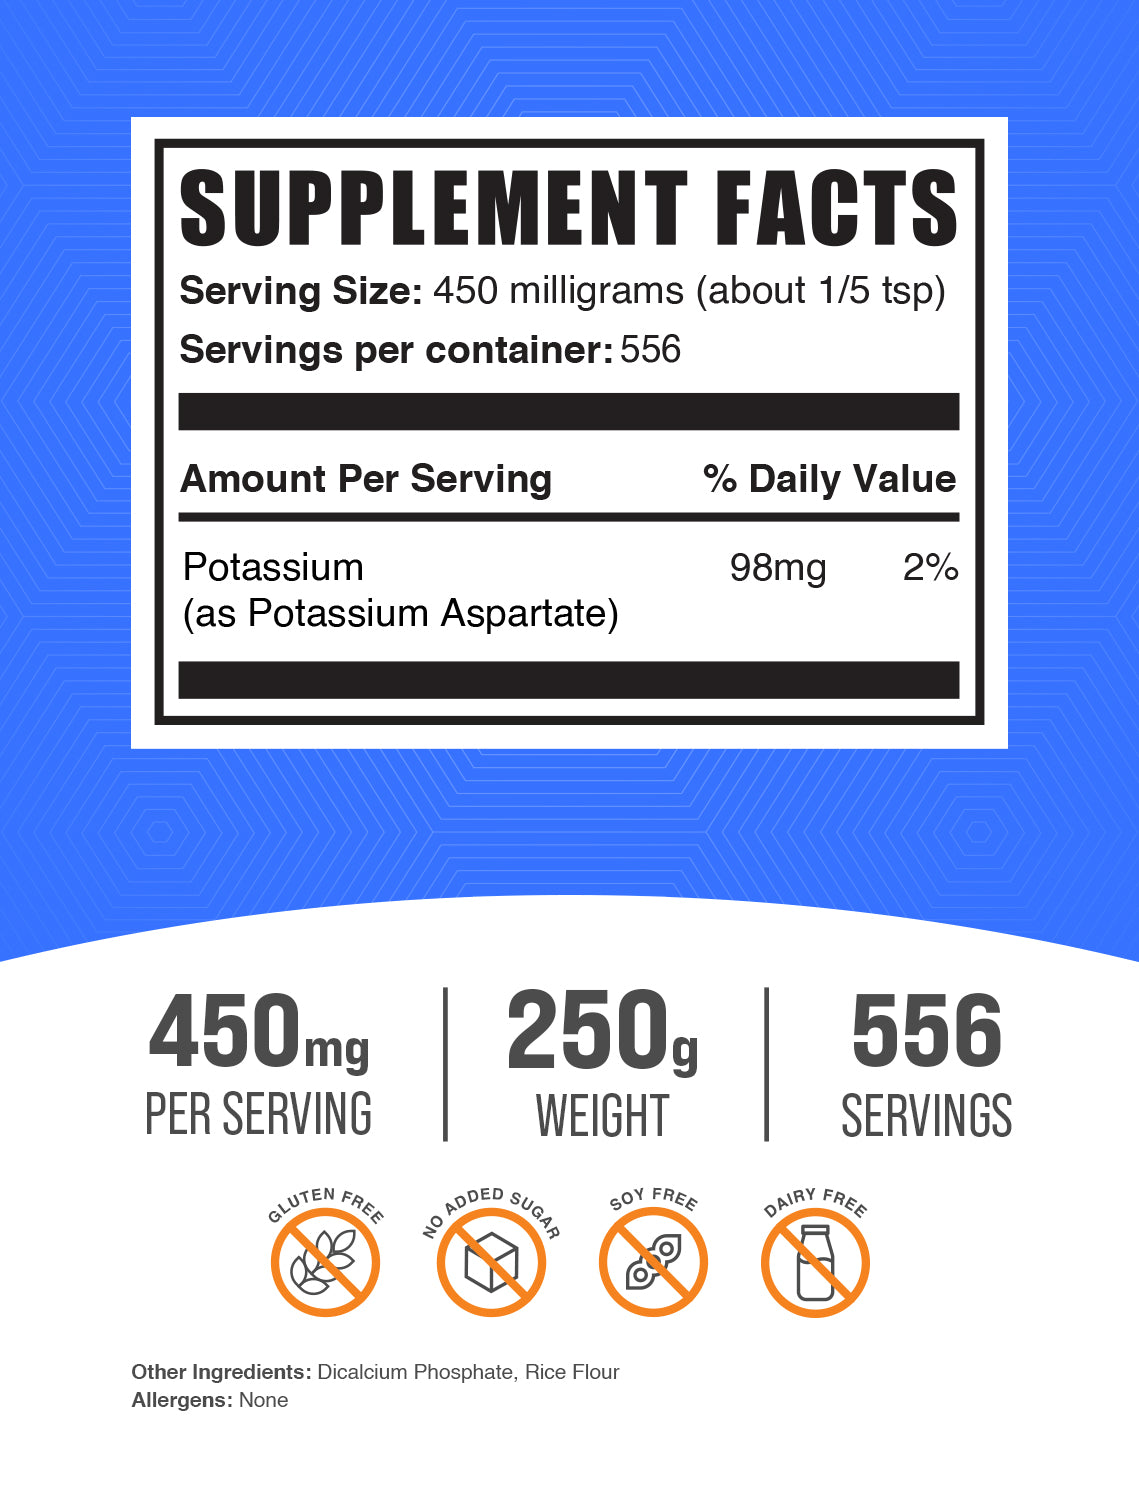 Potassium Aspartate powder label 250g